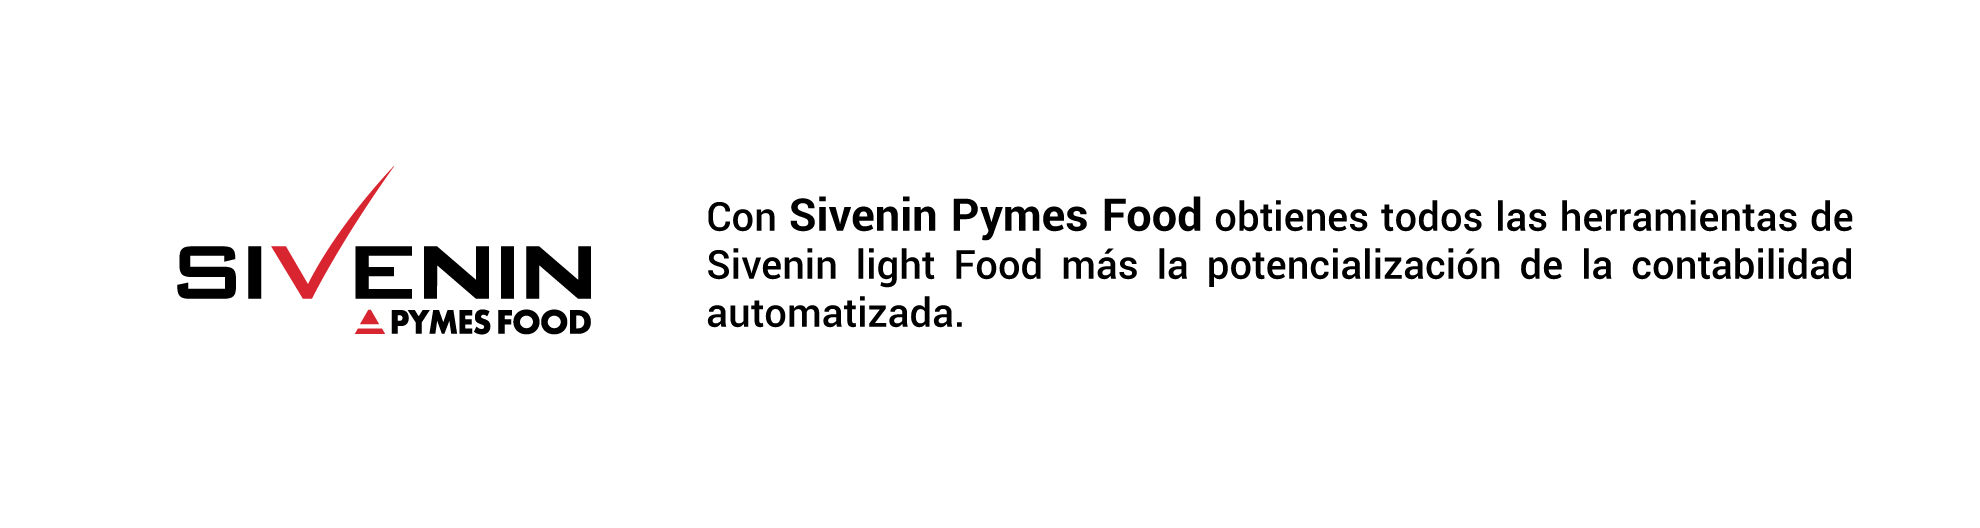 Sivenin-pymes-food